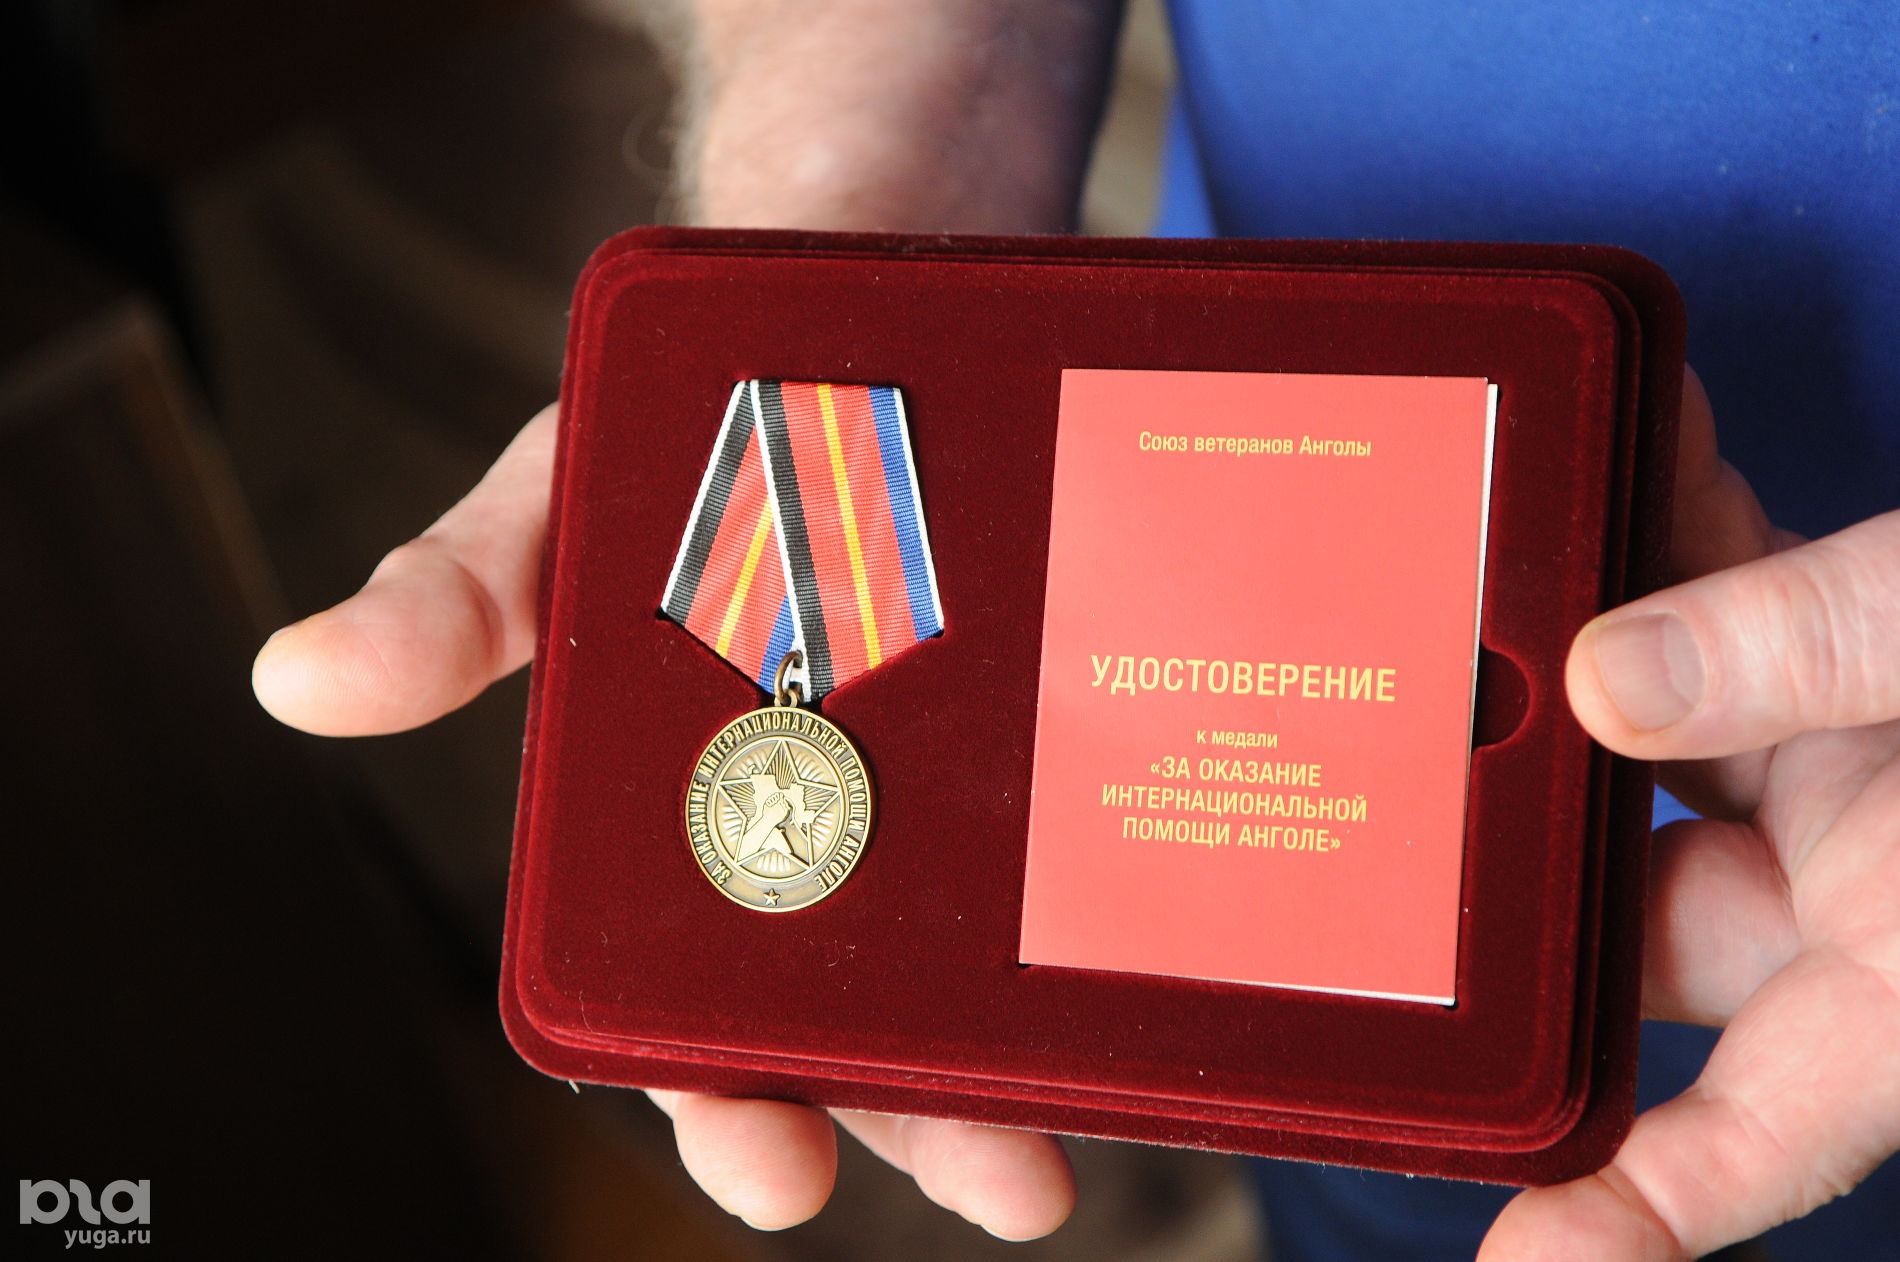 Награда от Союза ветеранов Анголы © Фото Юга.ру